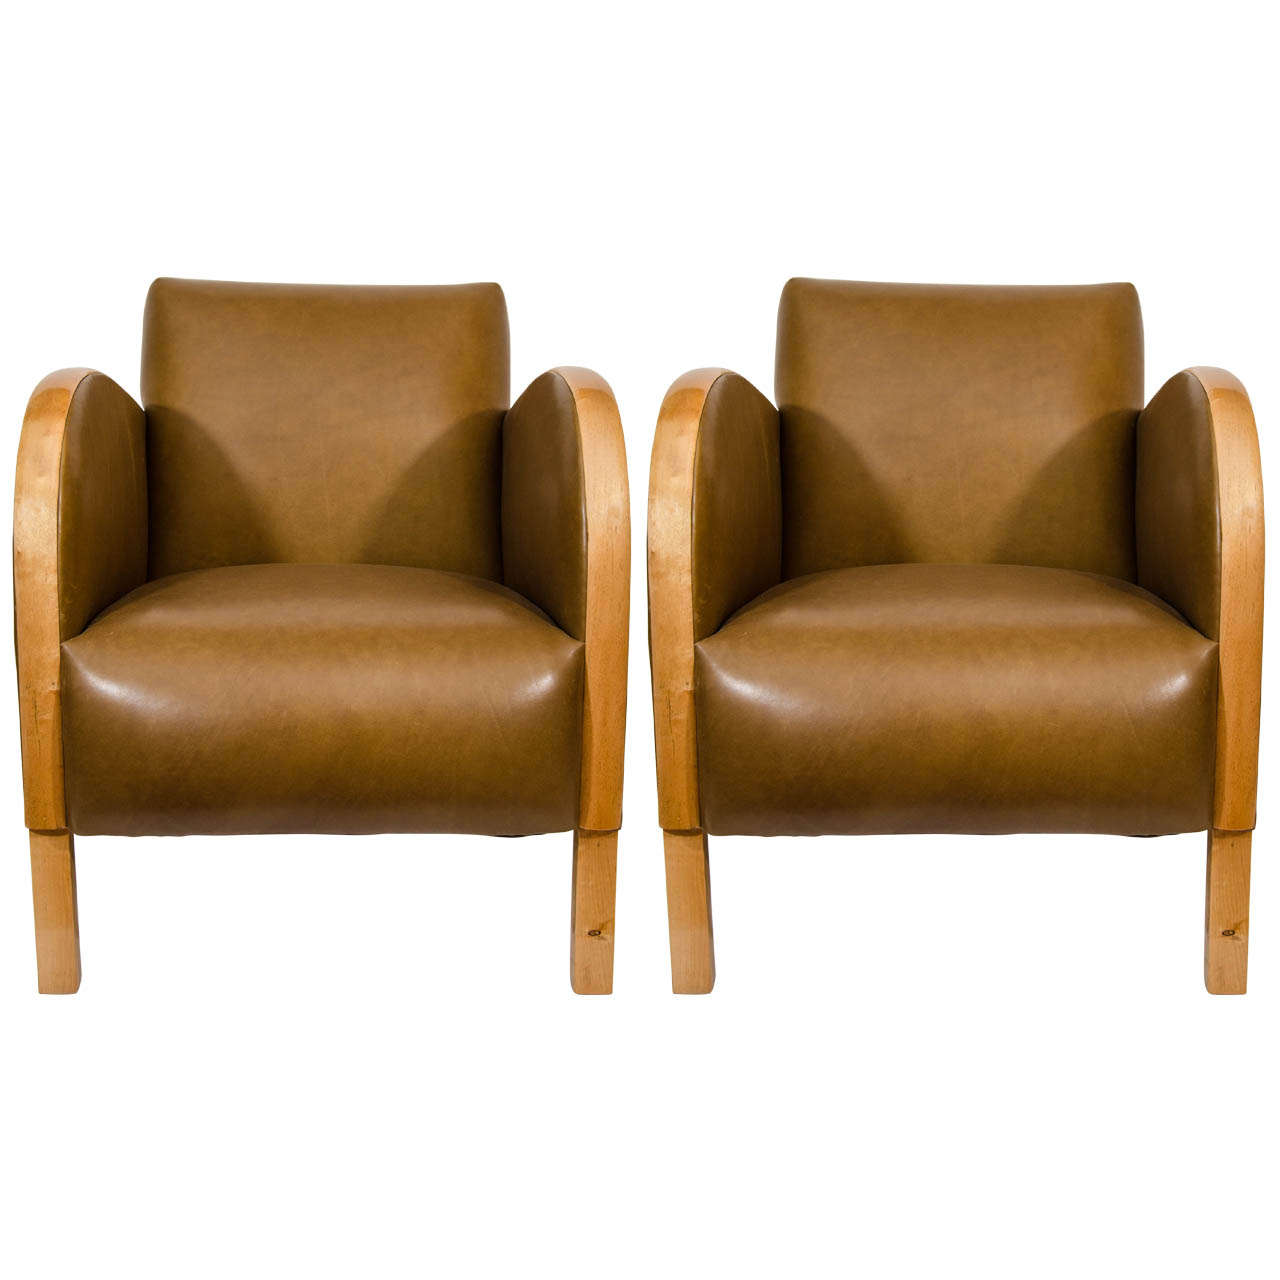 A Pair of Art Deco Club Chairs